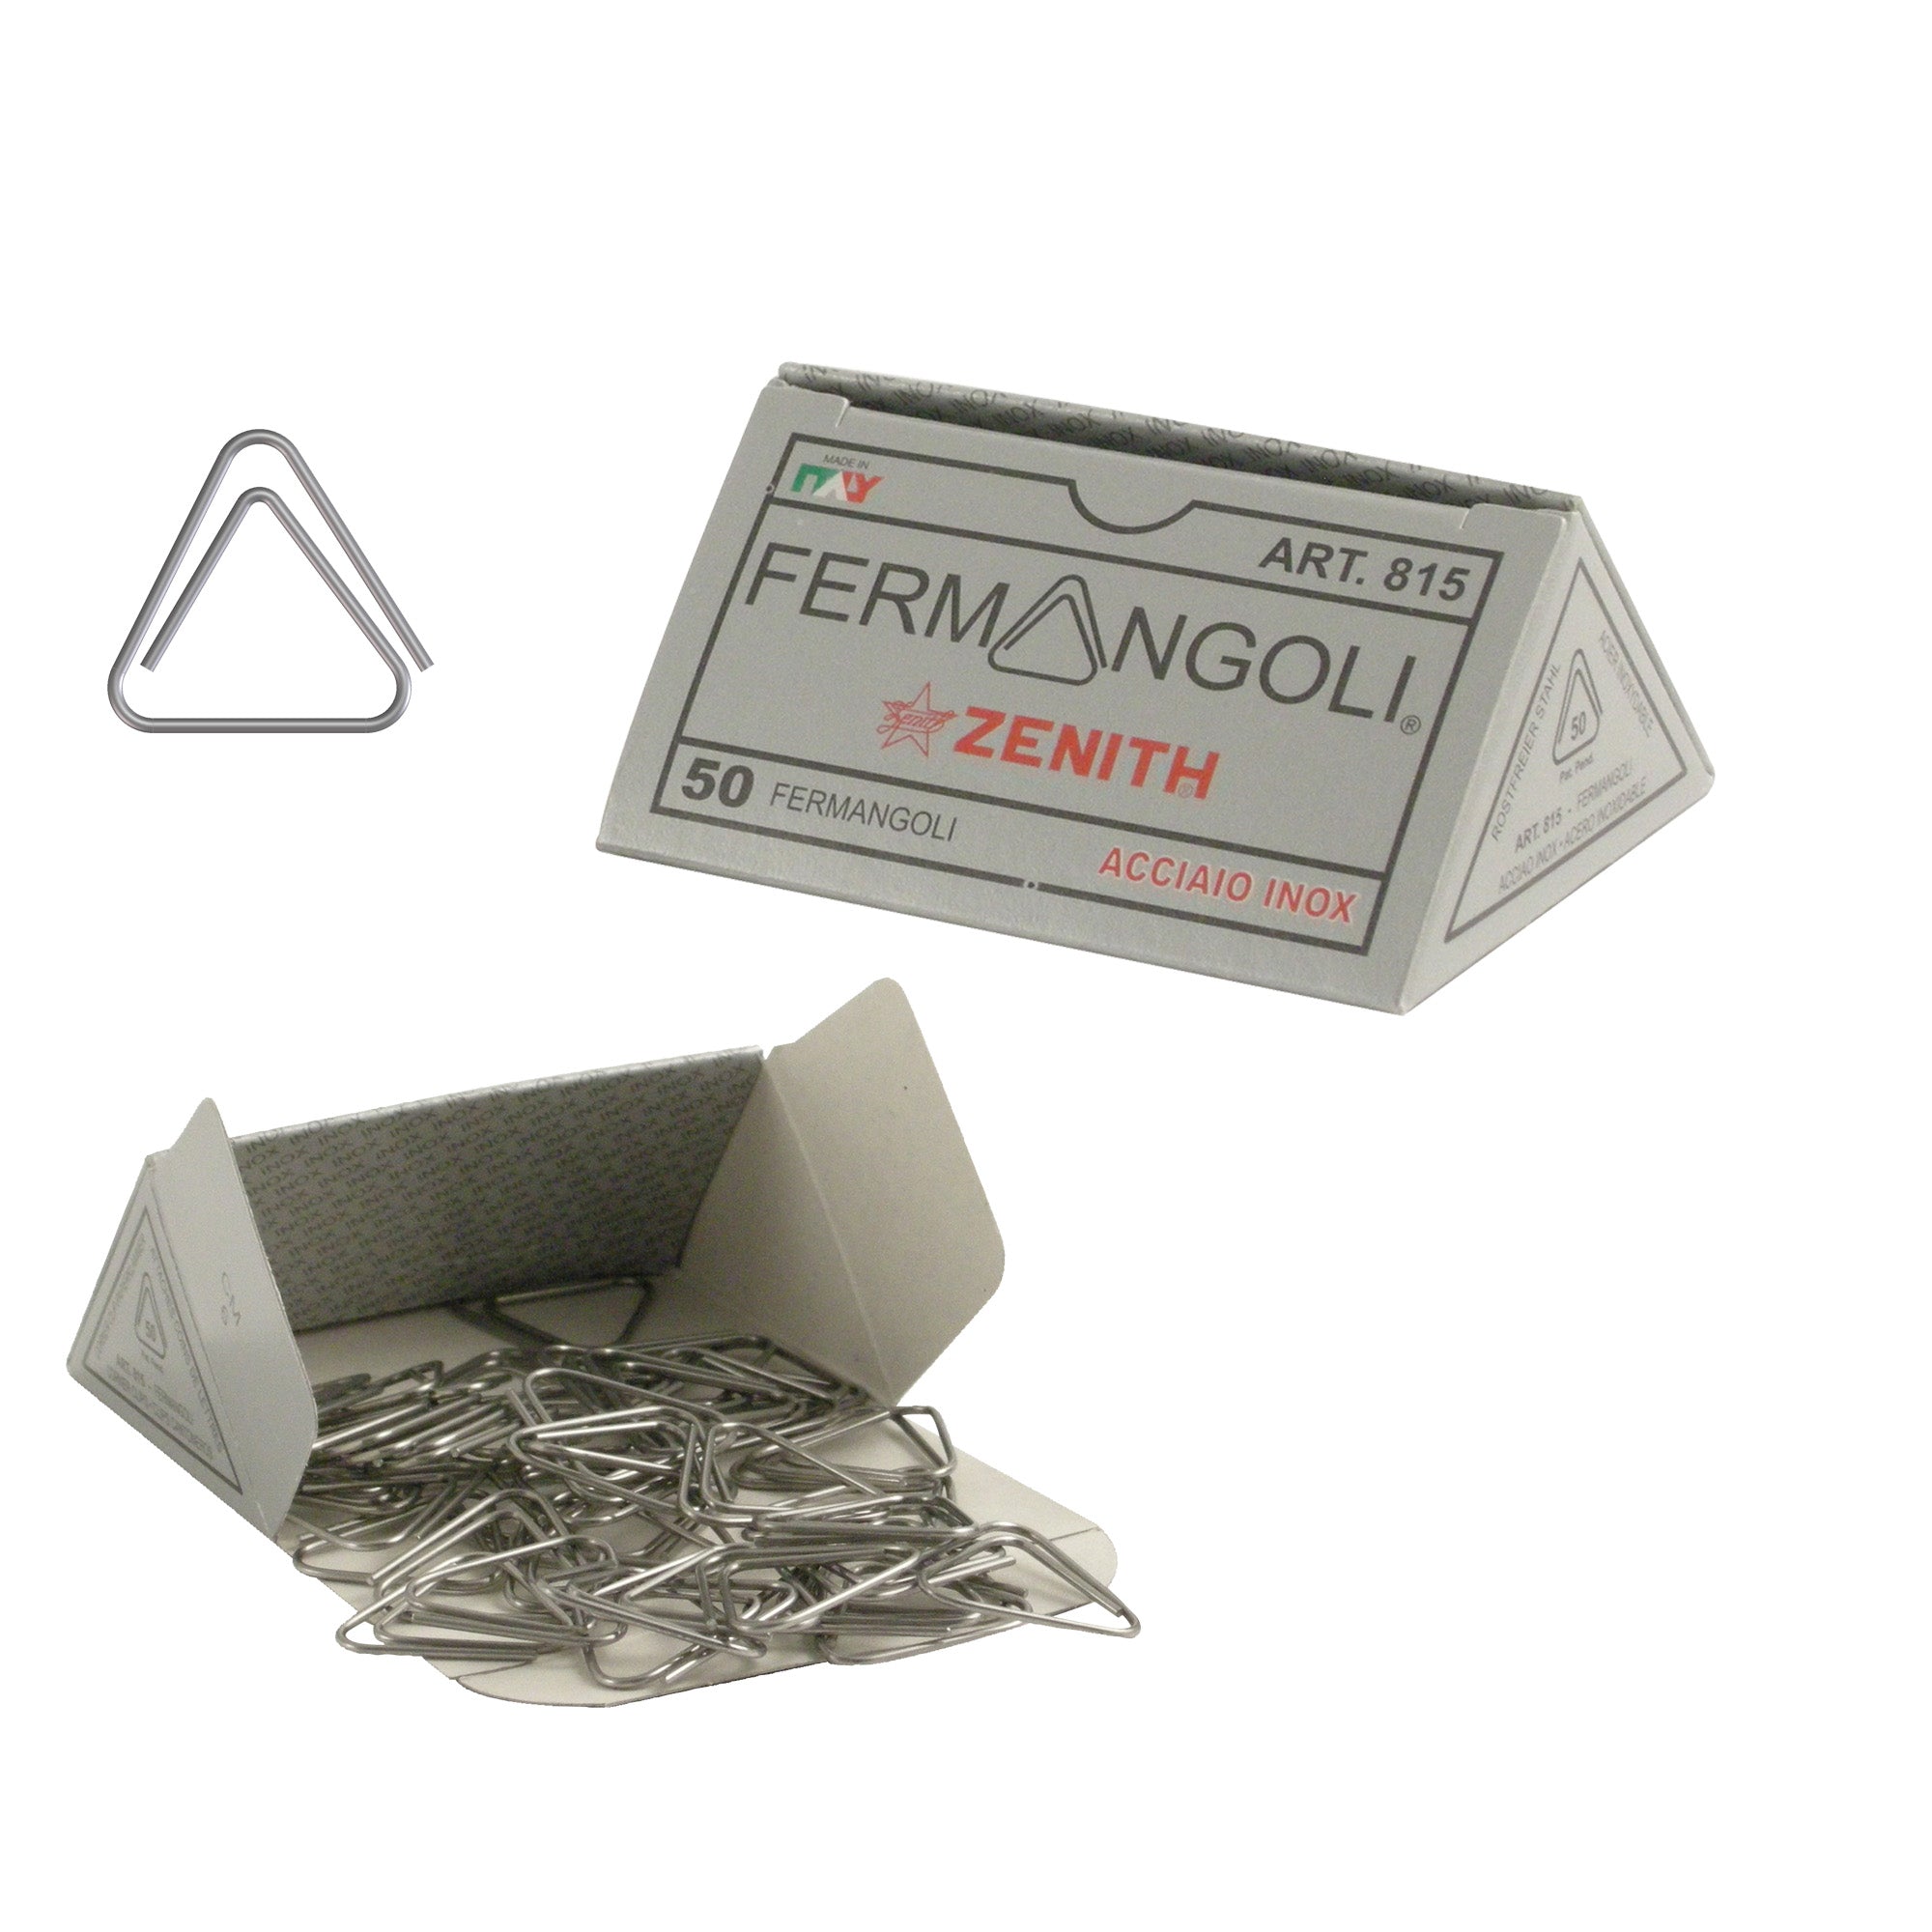 zenith-scatola-50-fermangoli-815-acciaio-inox-100